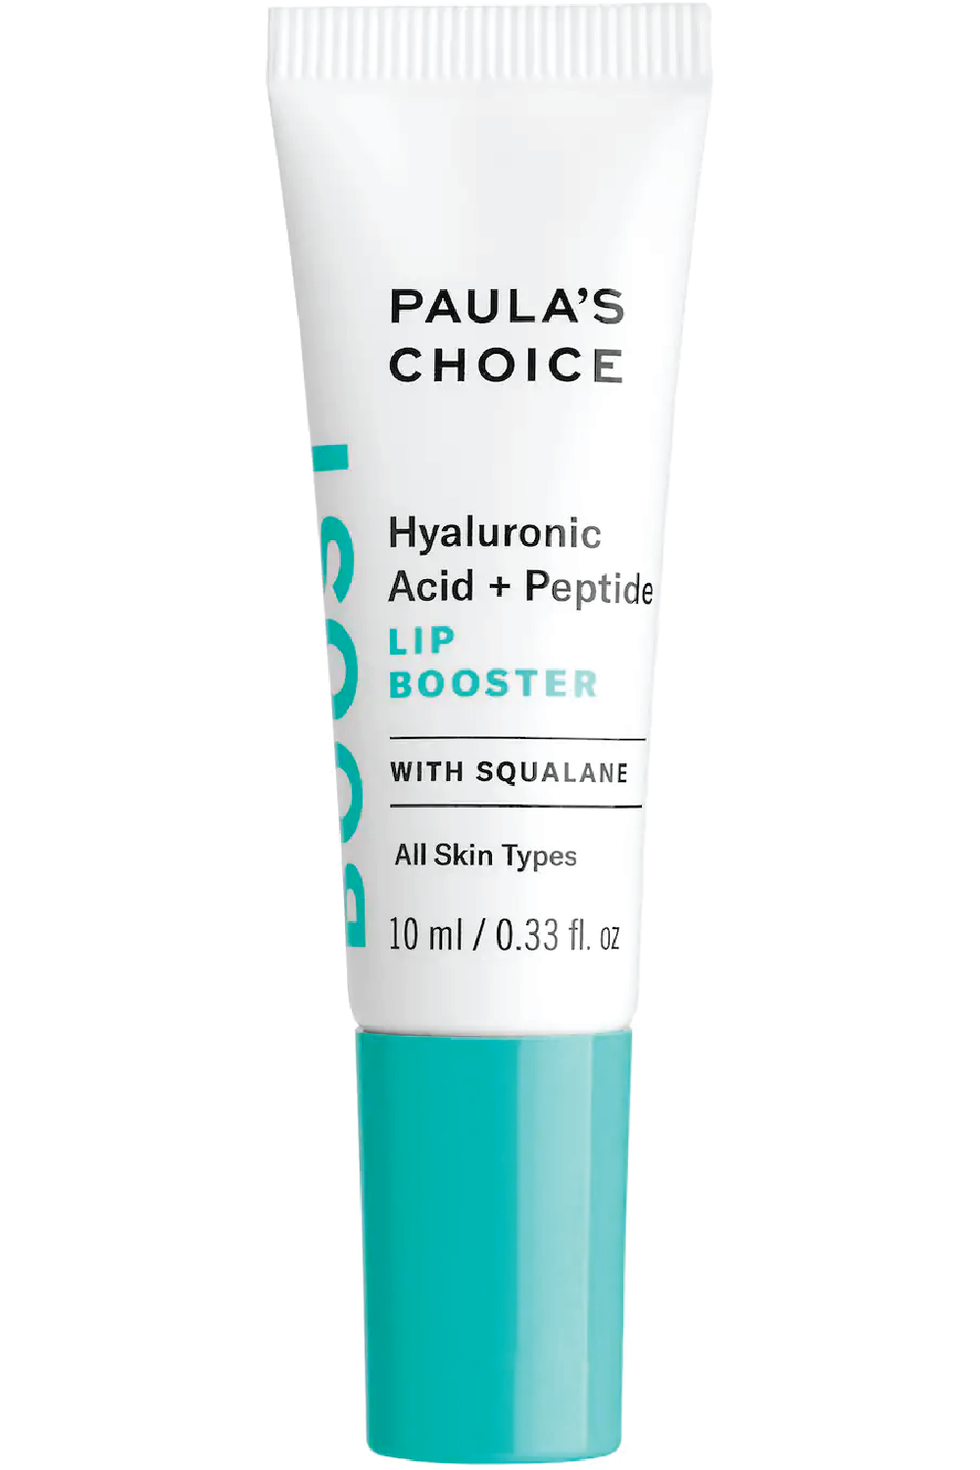 Paula's Choice Hyaluronic Acid + Peptide Lip Treatment Booster